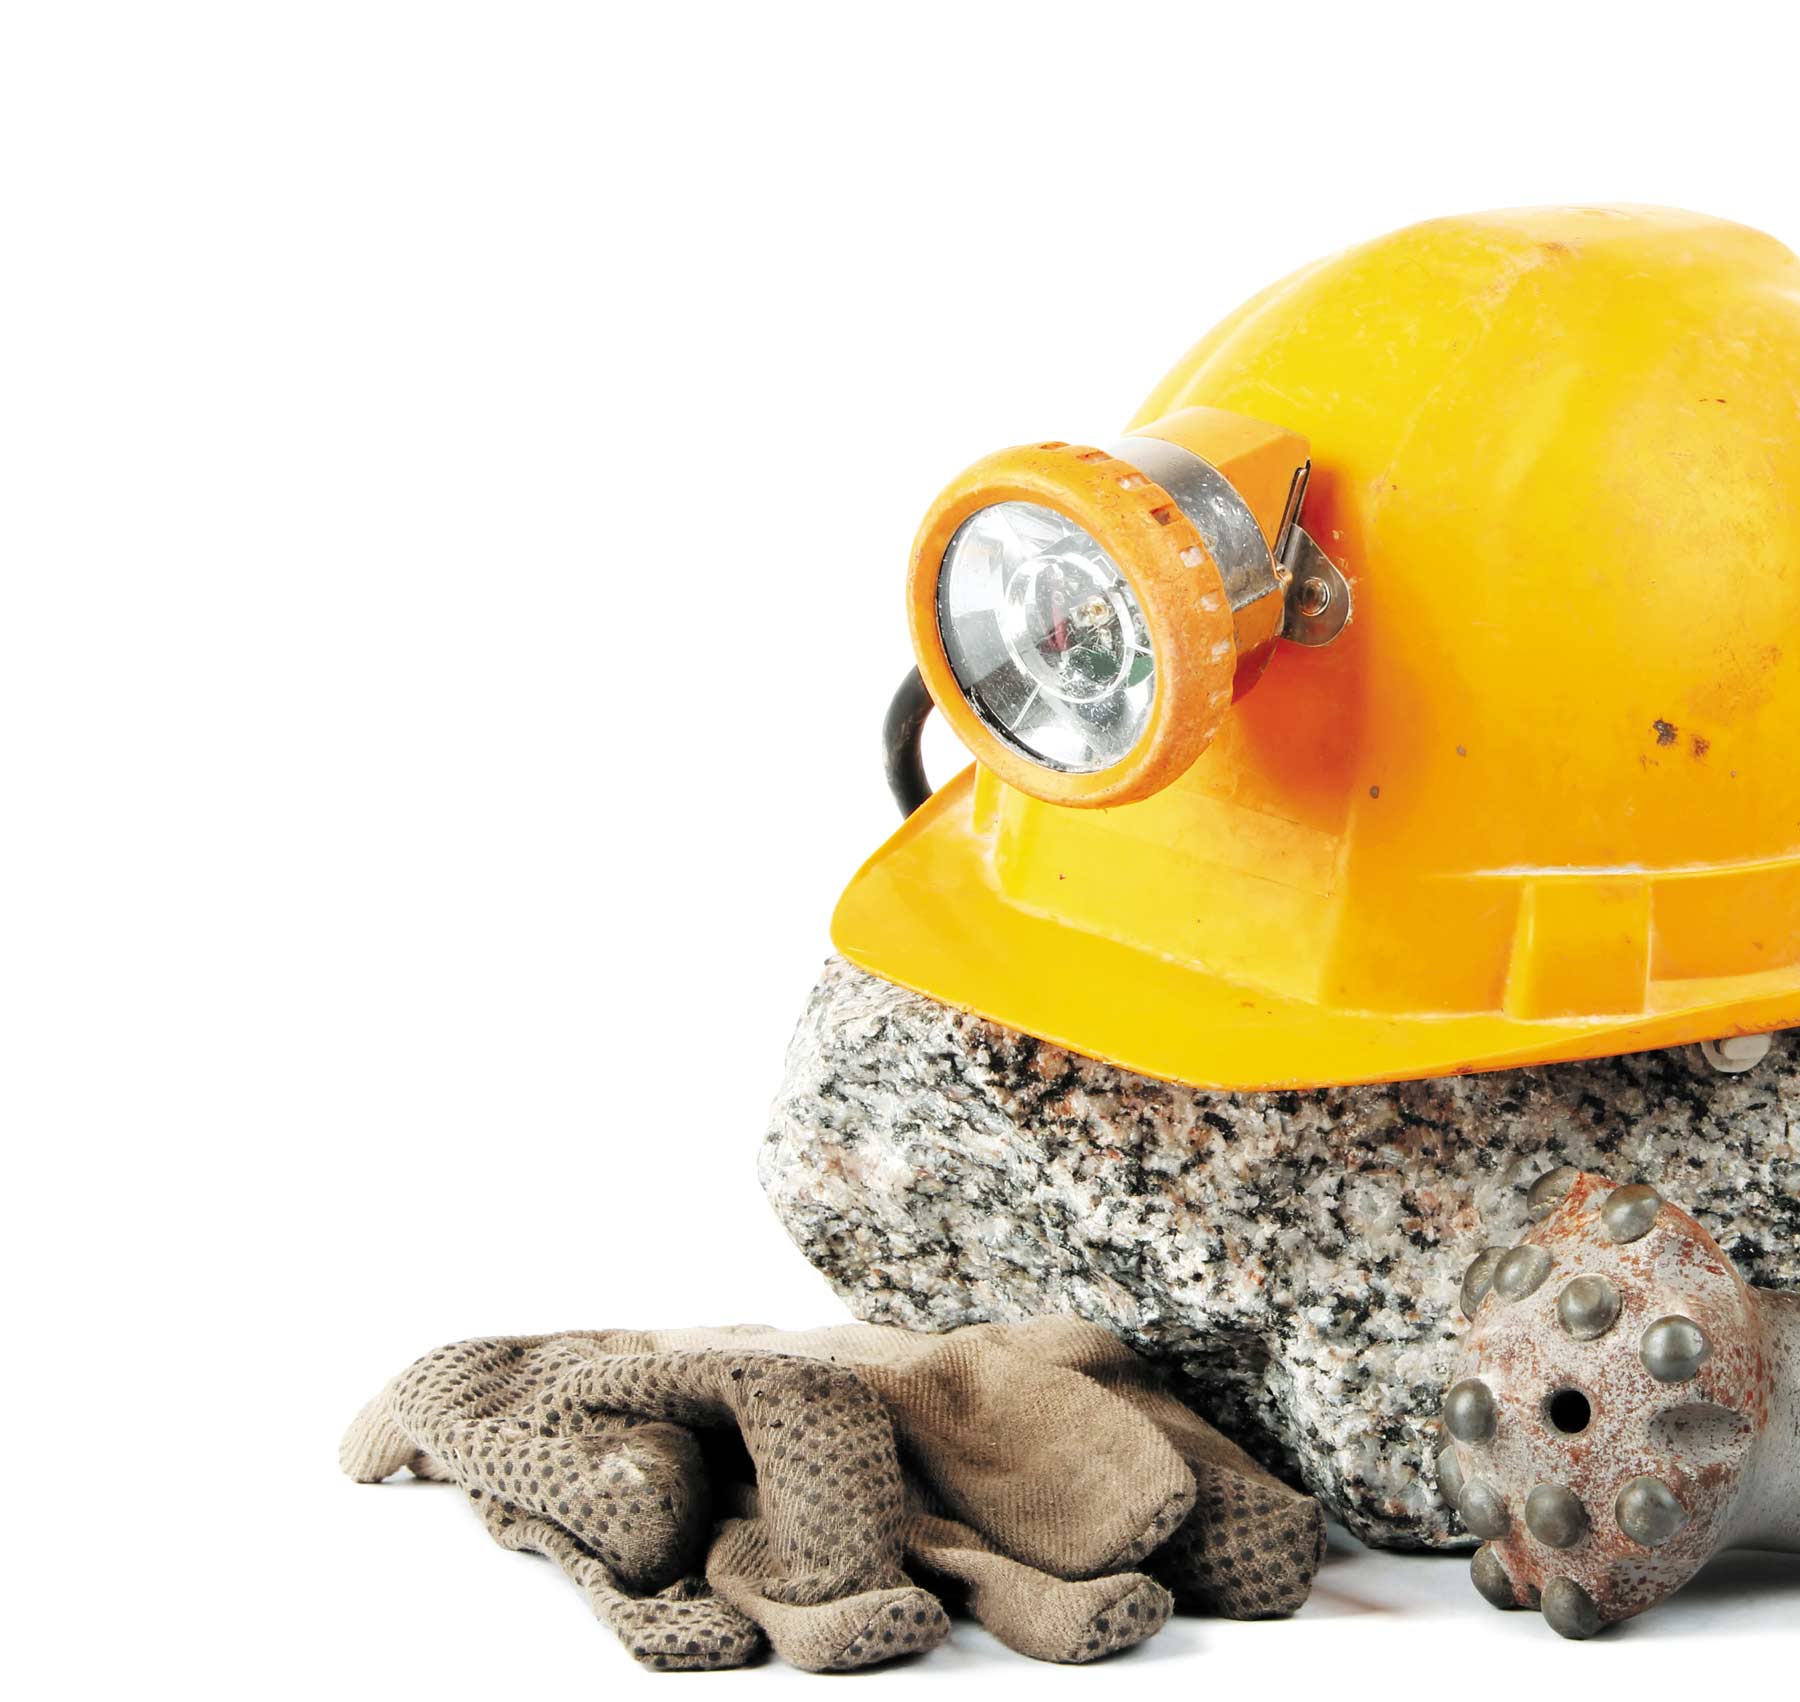 Miner's helmet sitting on a rock, gloves 